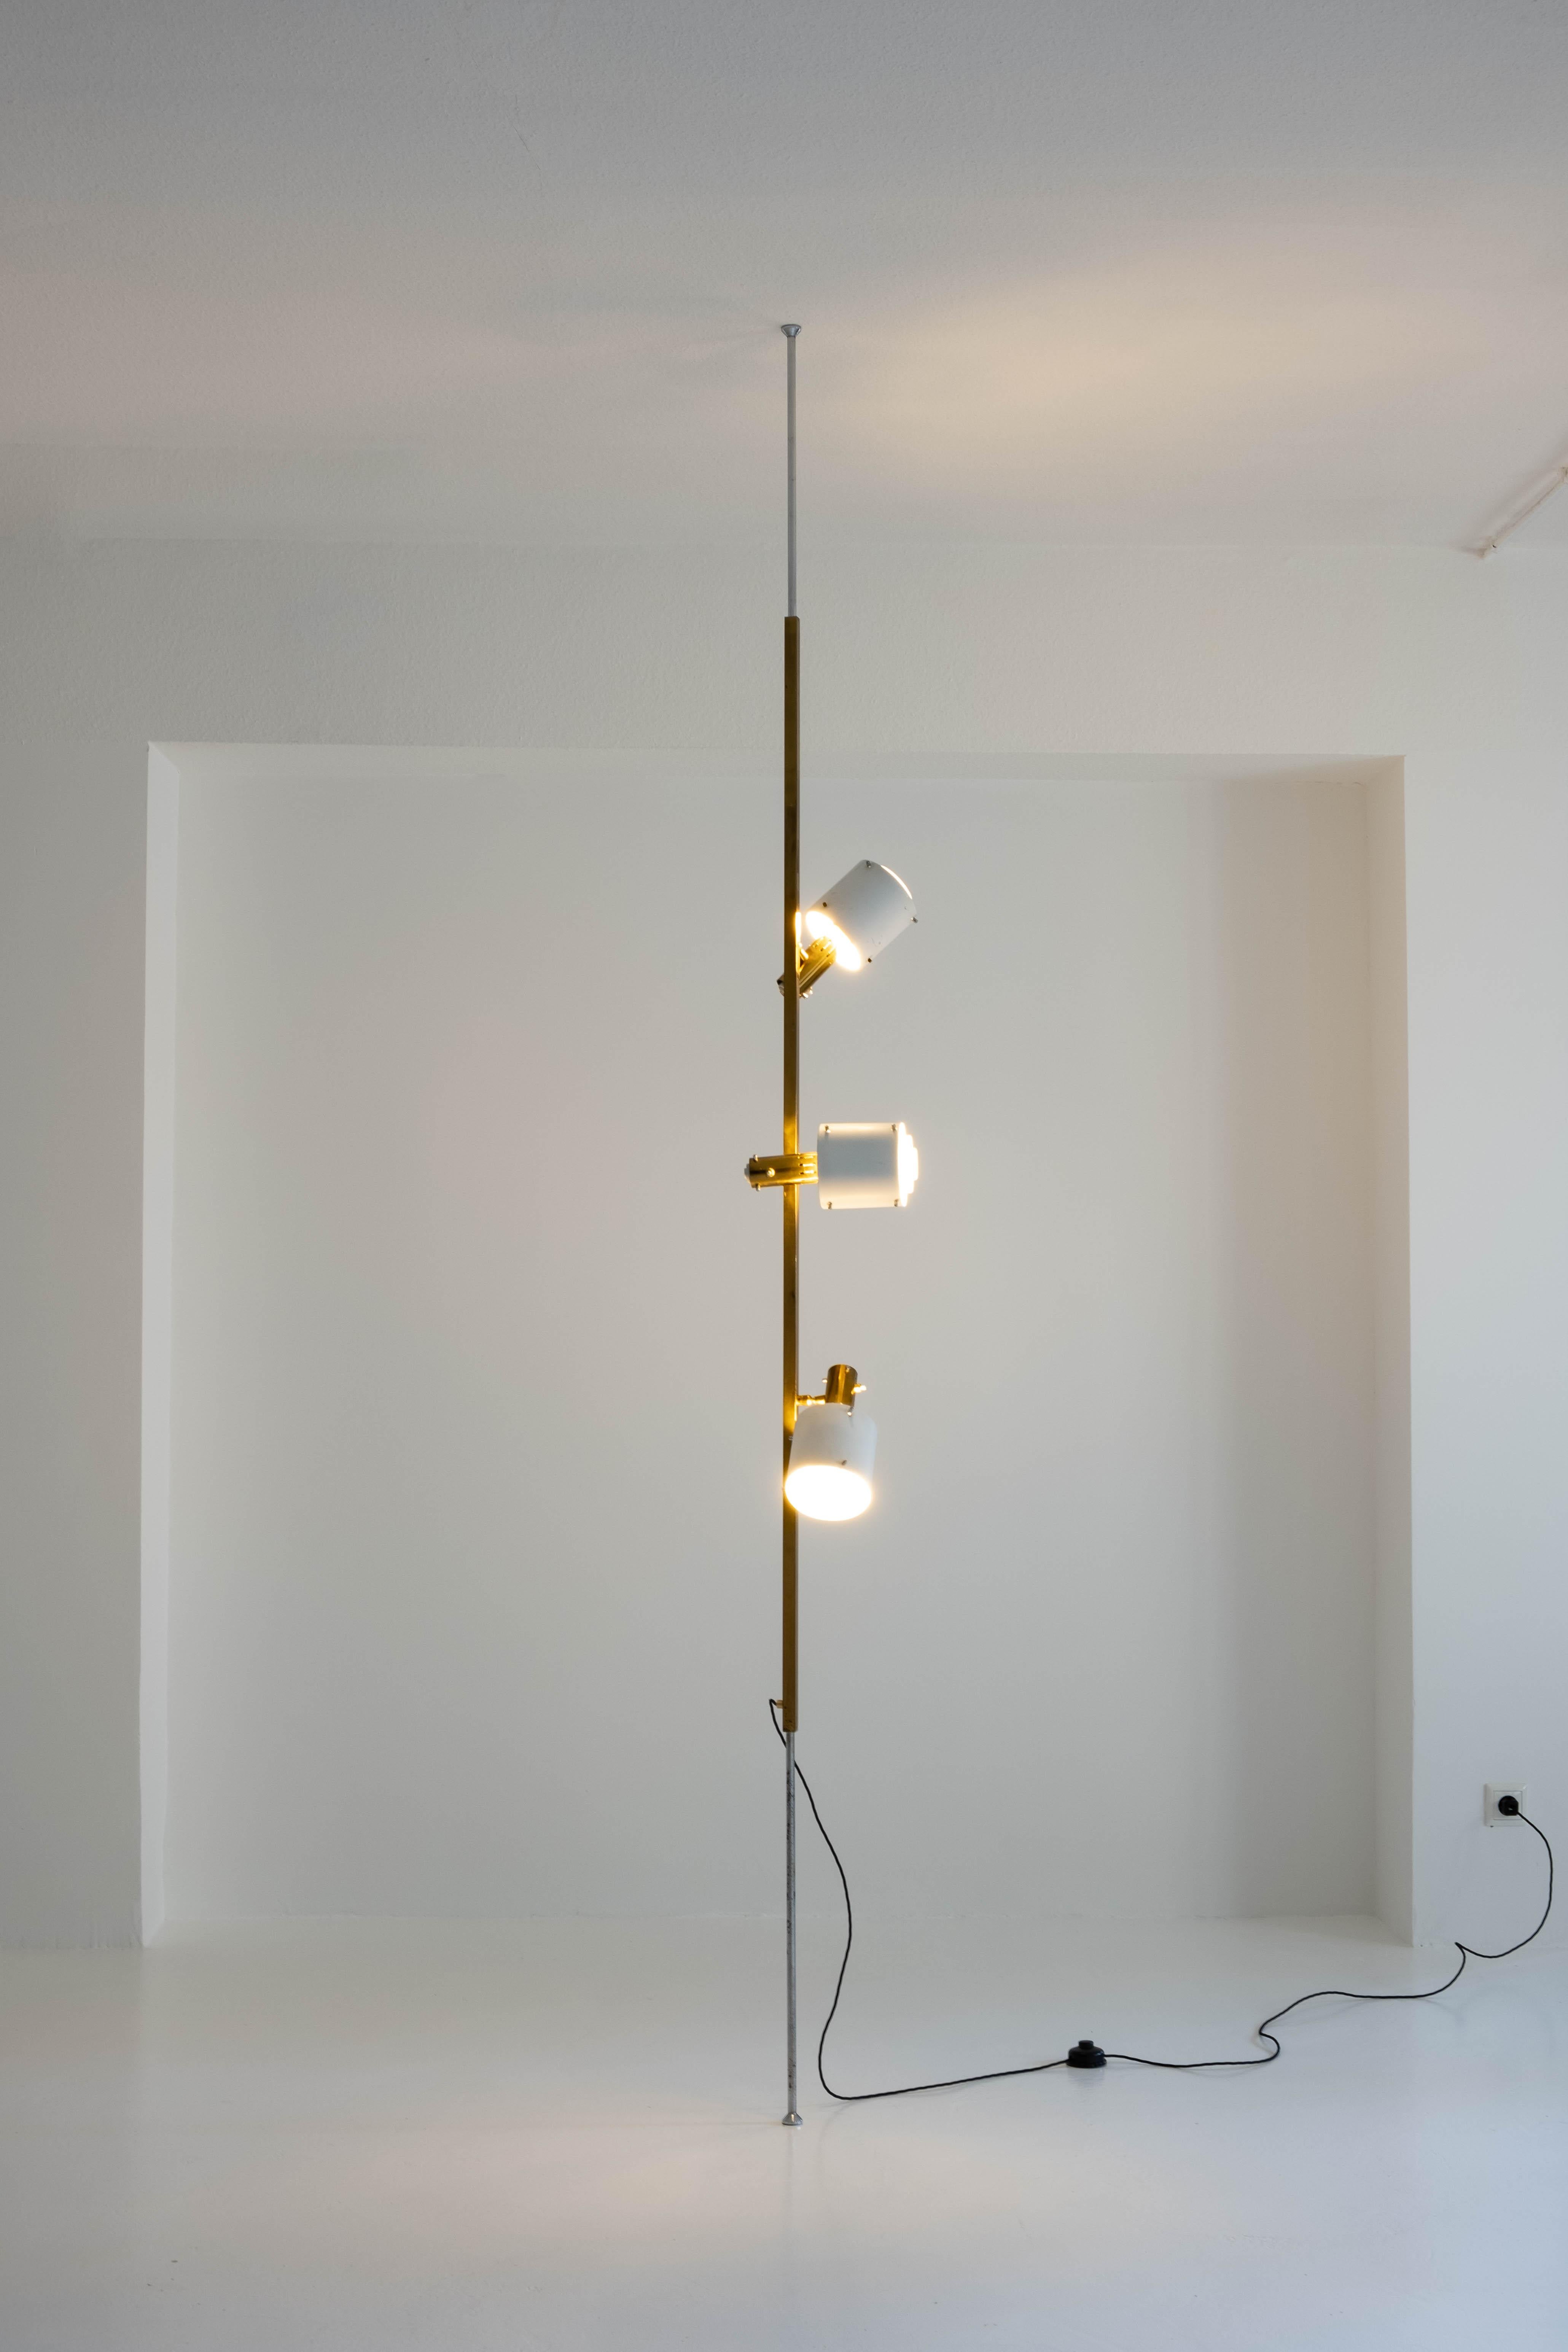 Italian Unique Luminaire/ Light / Floor Lamp Clamped Between the Ceiling and Floor